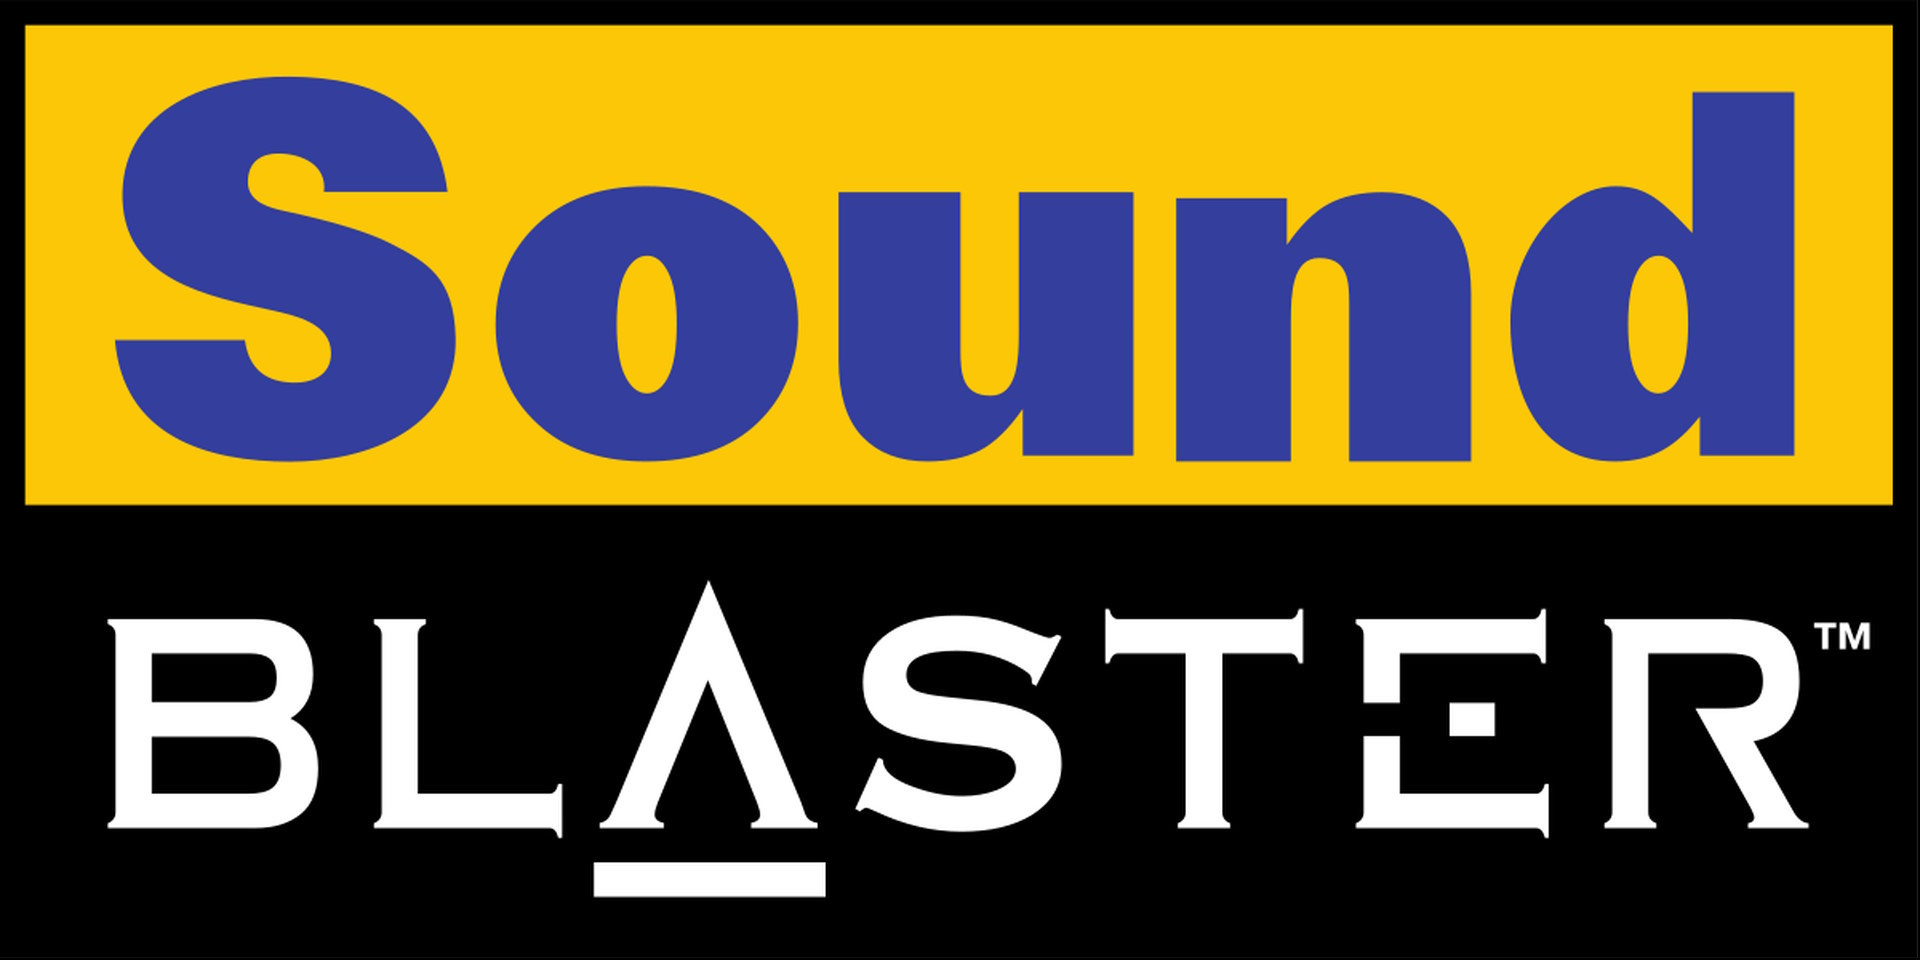 Sound Blaster logo